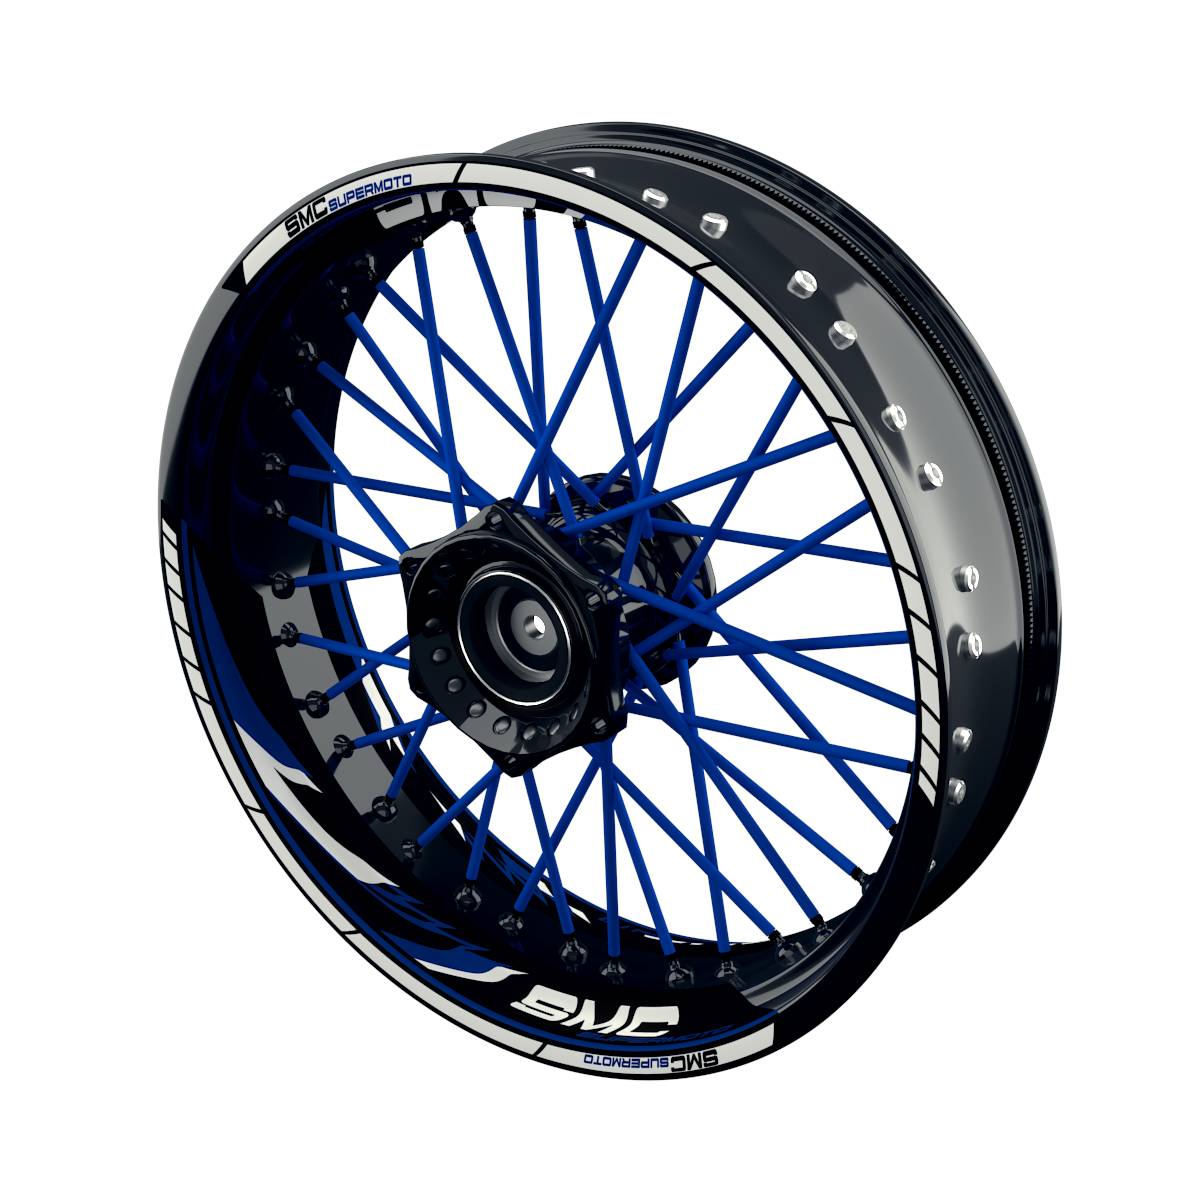 SMC Supermoto Razor Felgenaufkleber Wheelsticker Premium geteilt